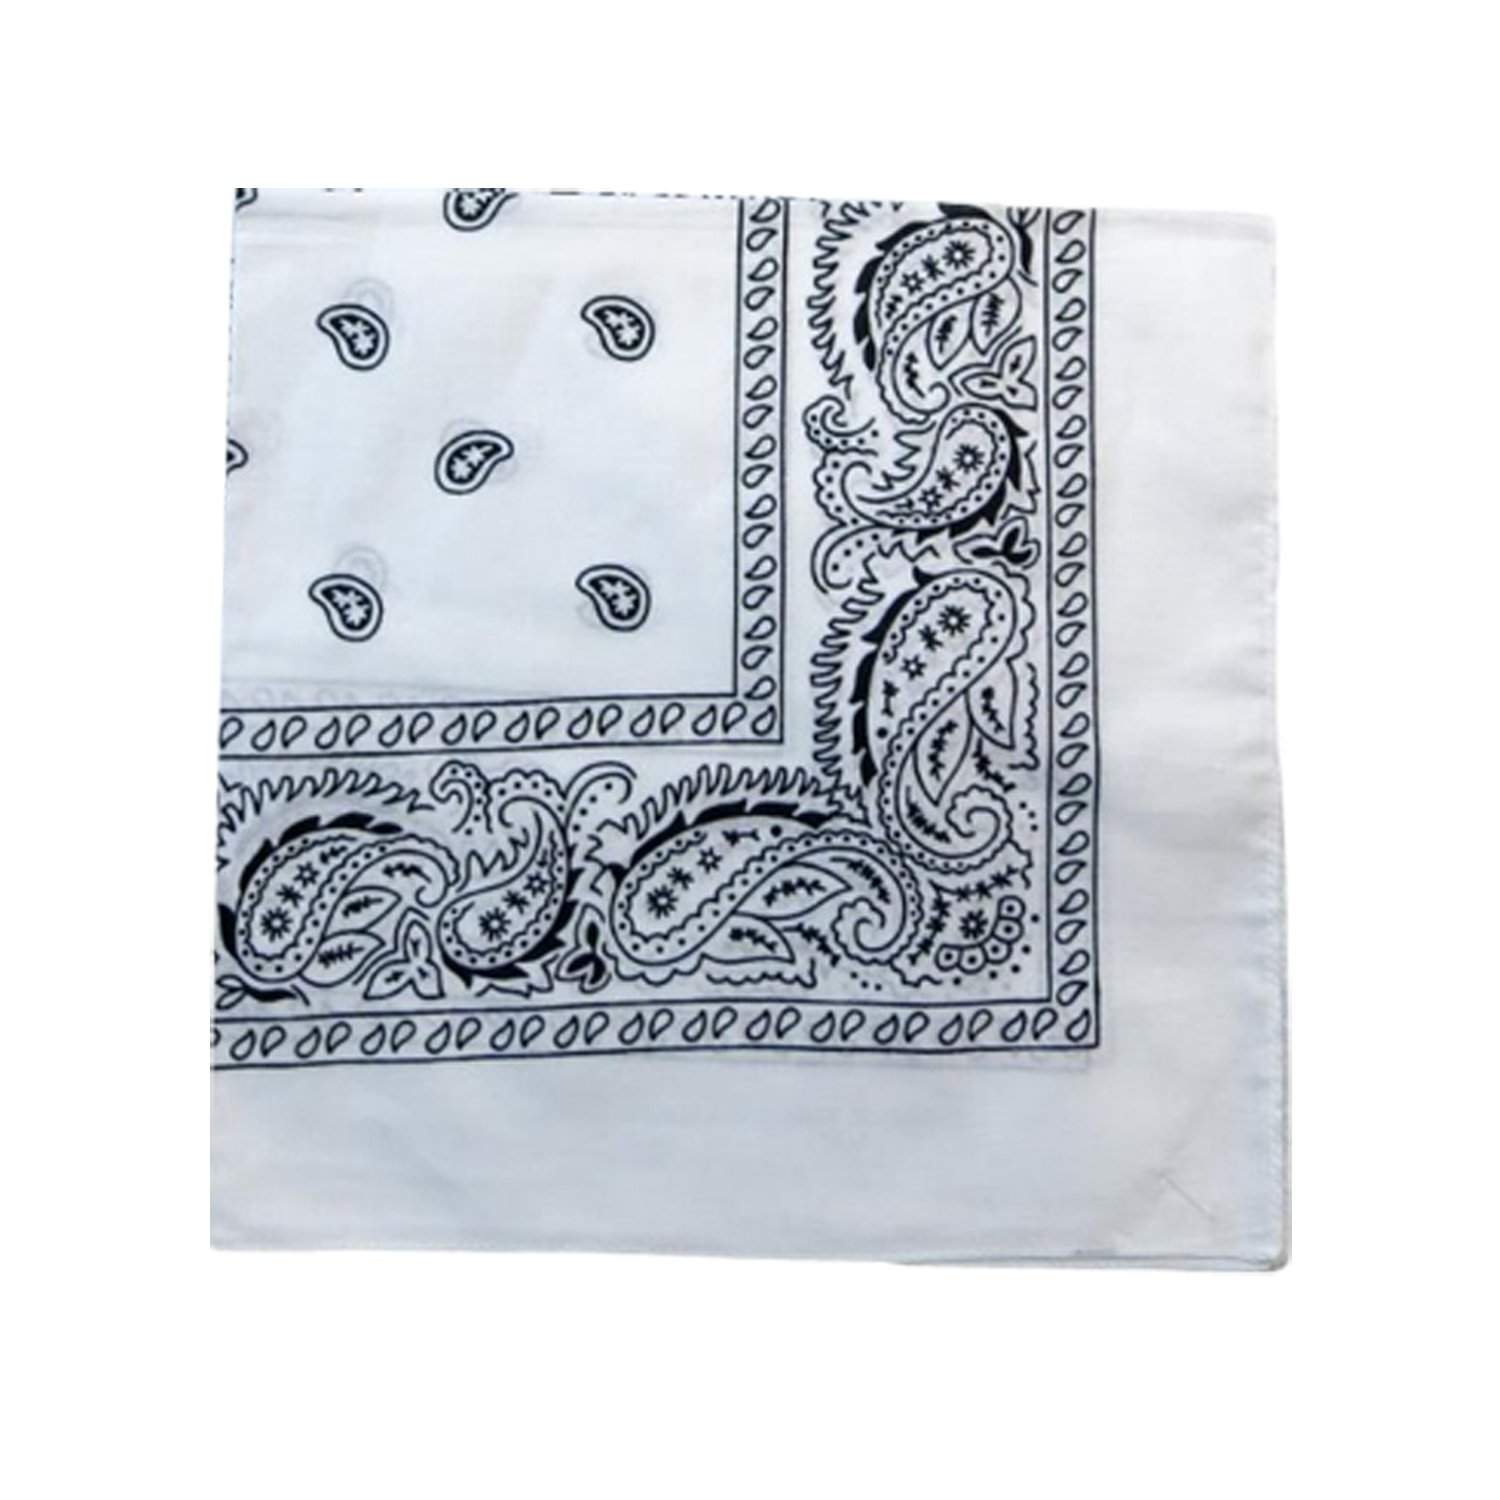 Unibasic Paisley Cotton Bandana XL, head wrap, handkerchief - 10 Pack